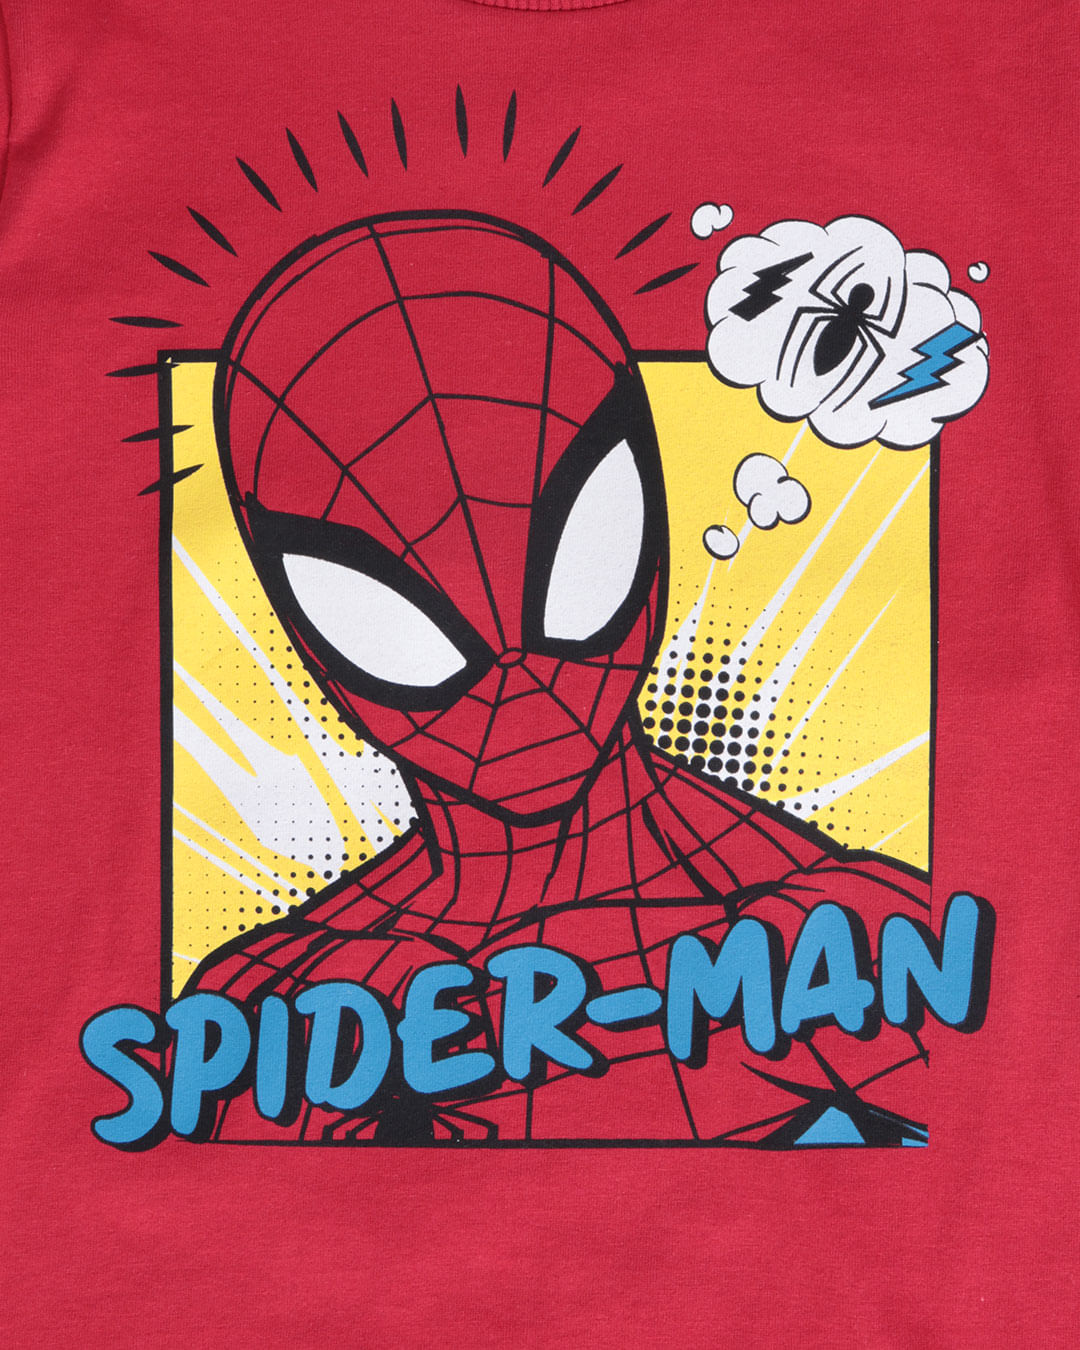 Camiseta-Infantil-Homem-Aranha-Marvel-Vermelho